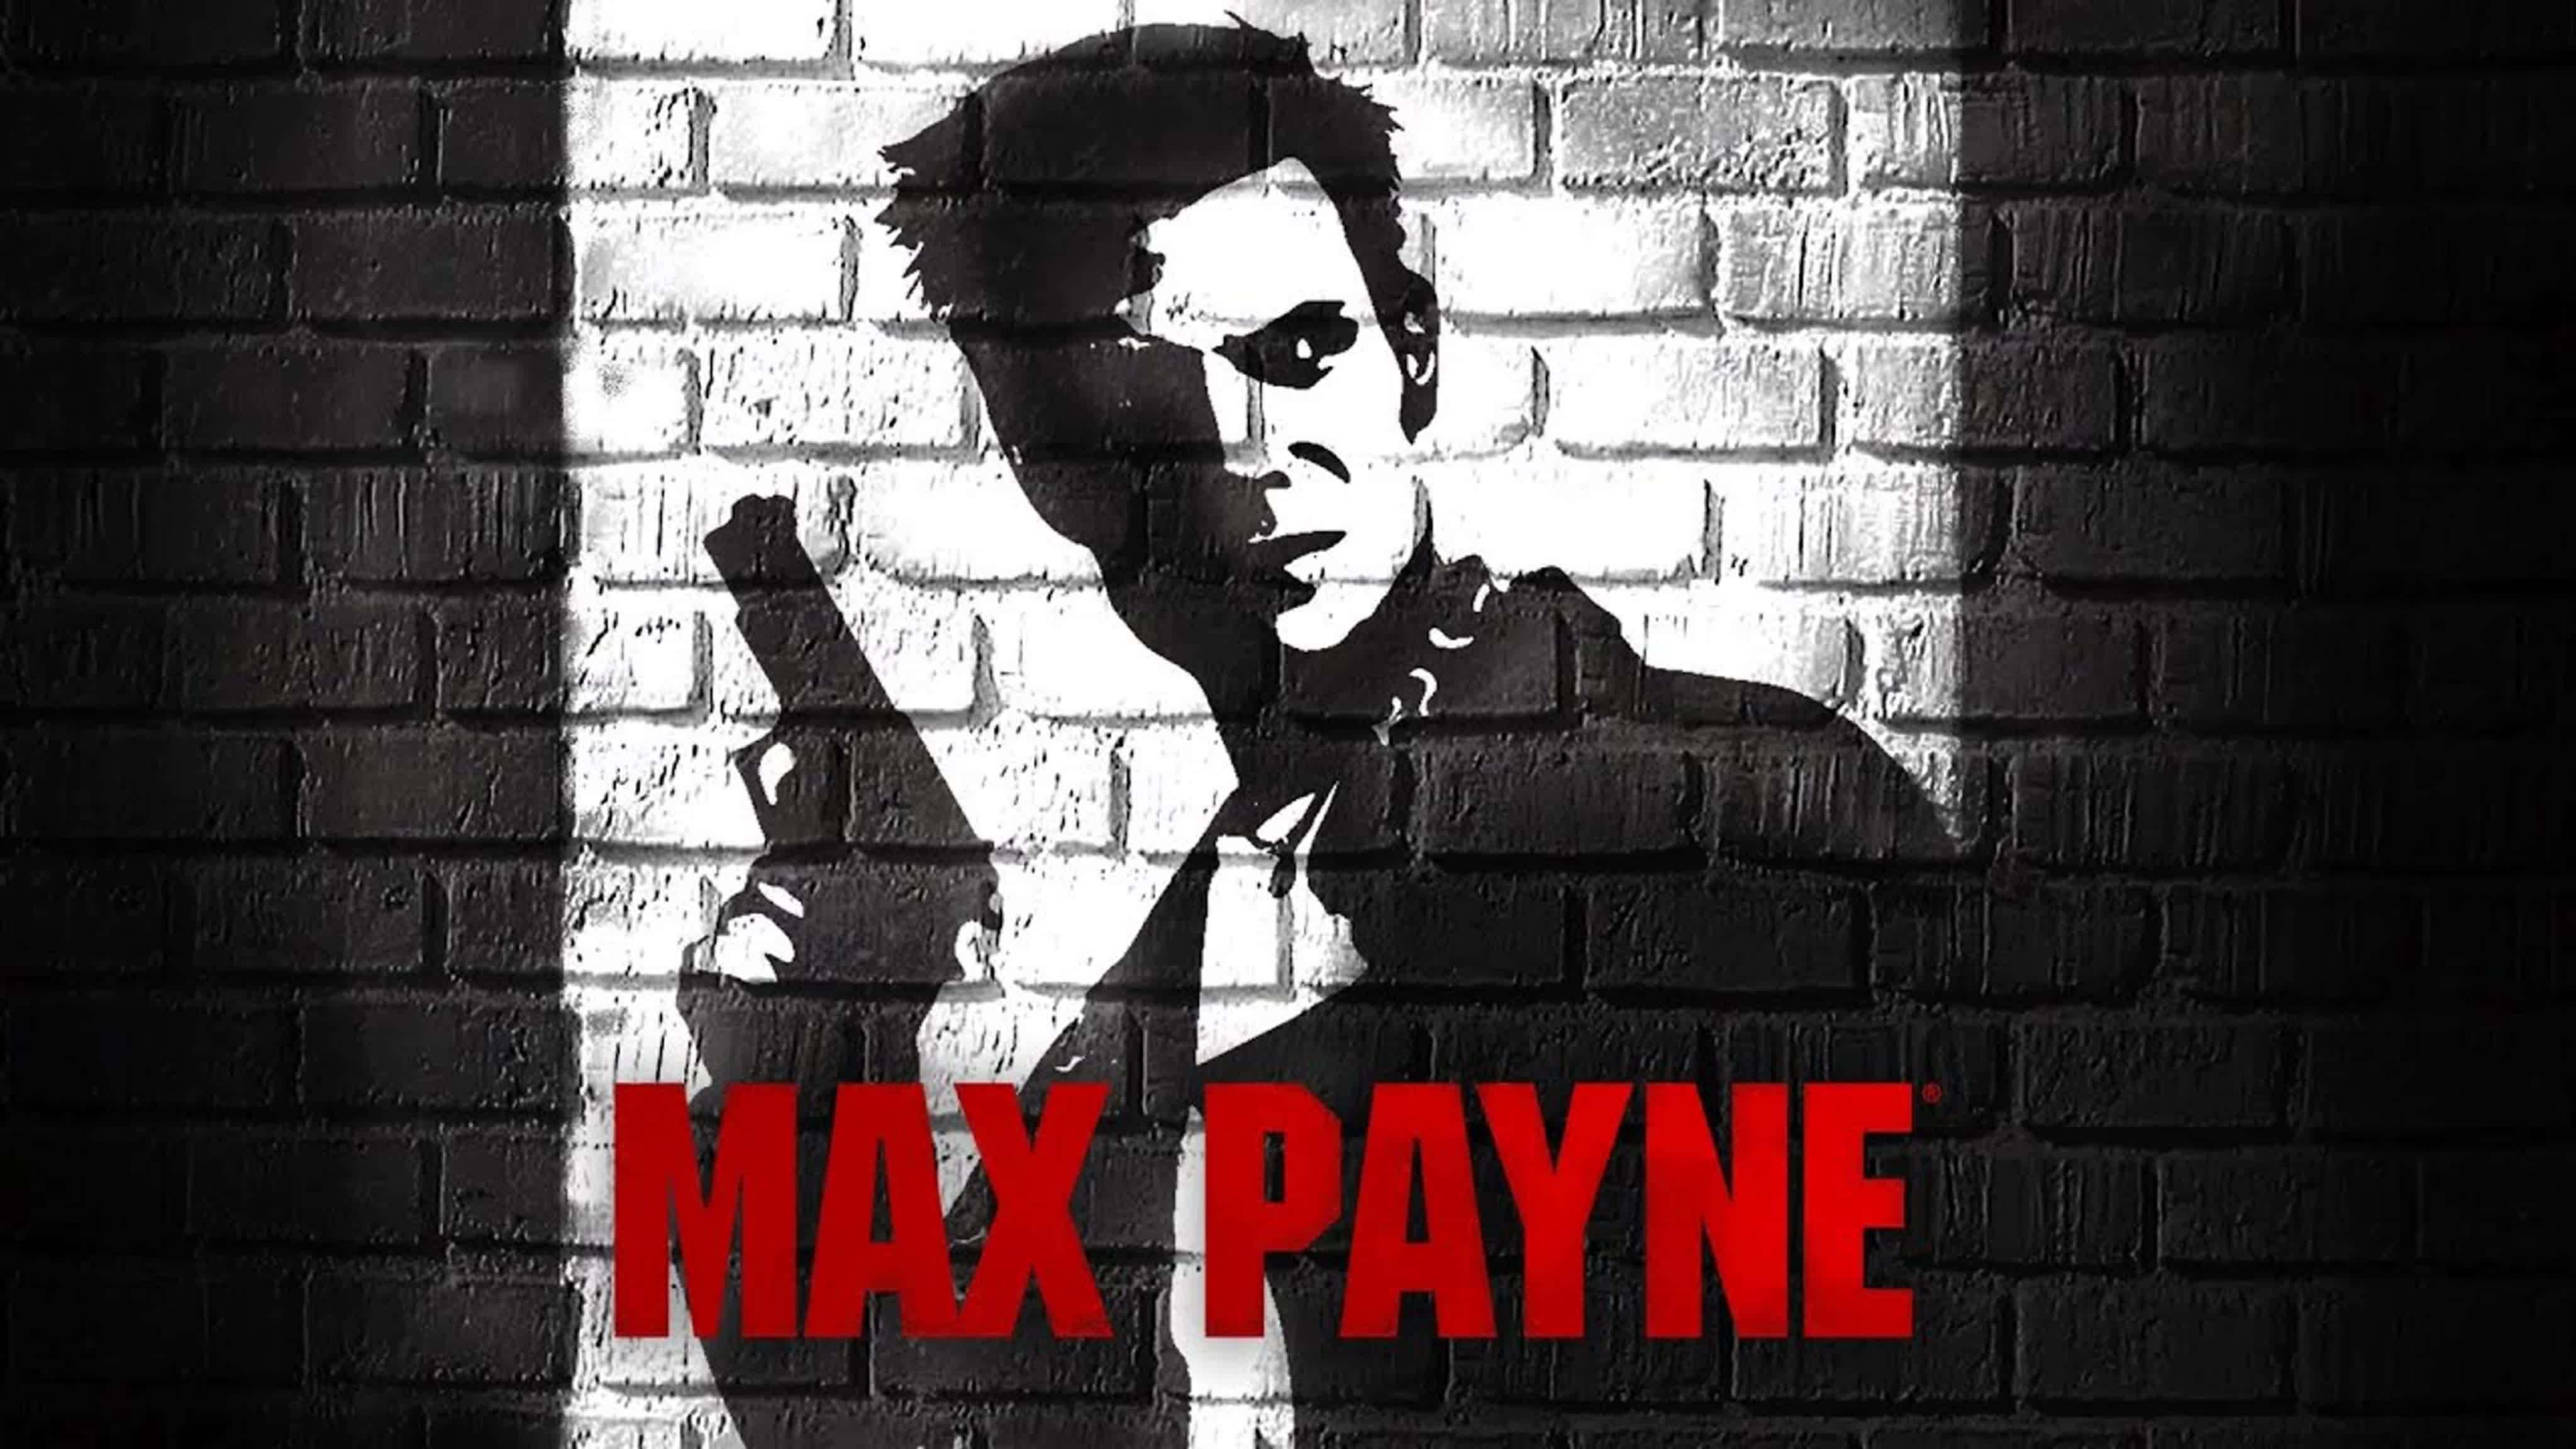 Макс играет 1. Max Payne 1. Max Payne 2001. Макс Пейн 1 обложка. Max Payne 1 Art.